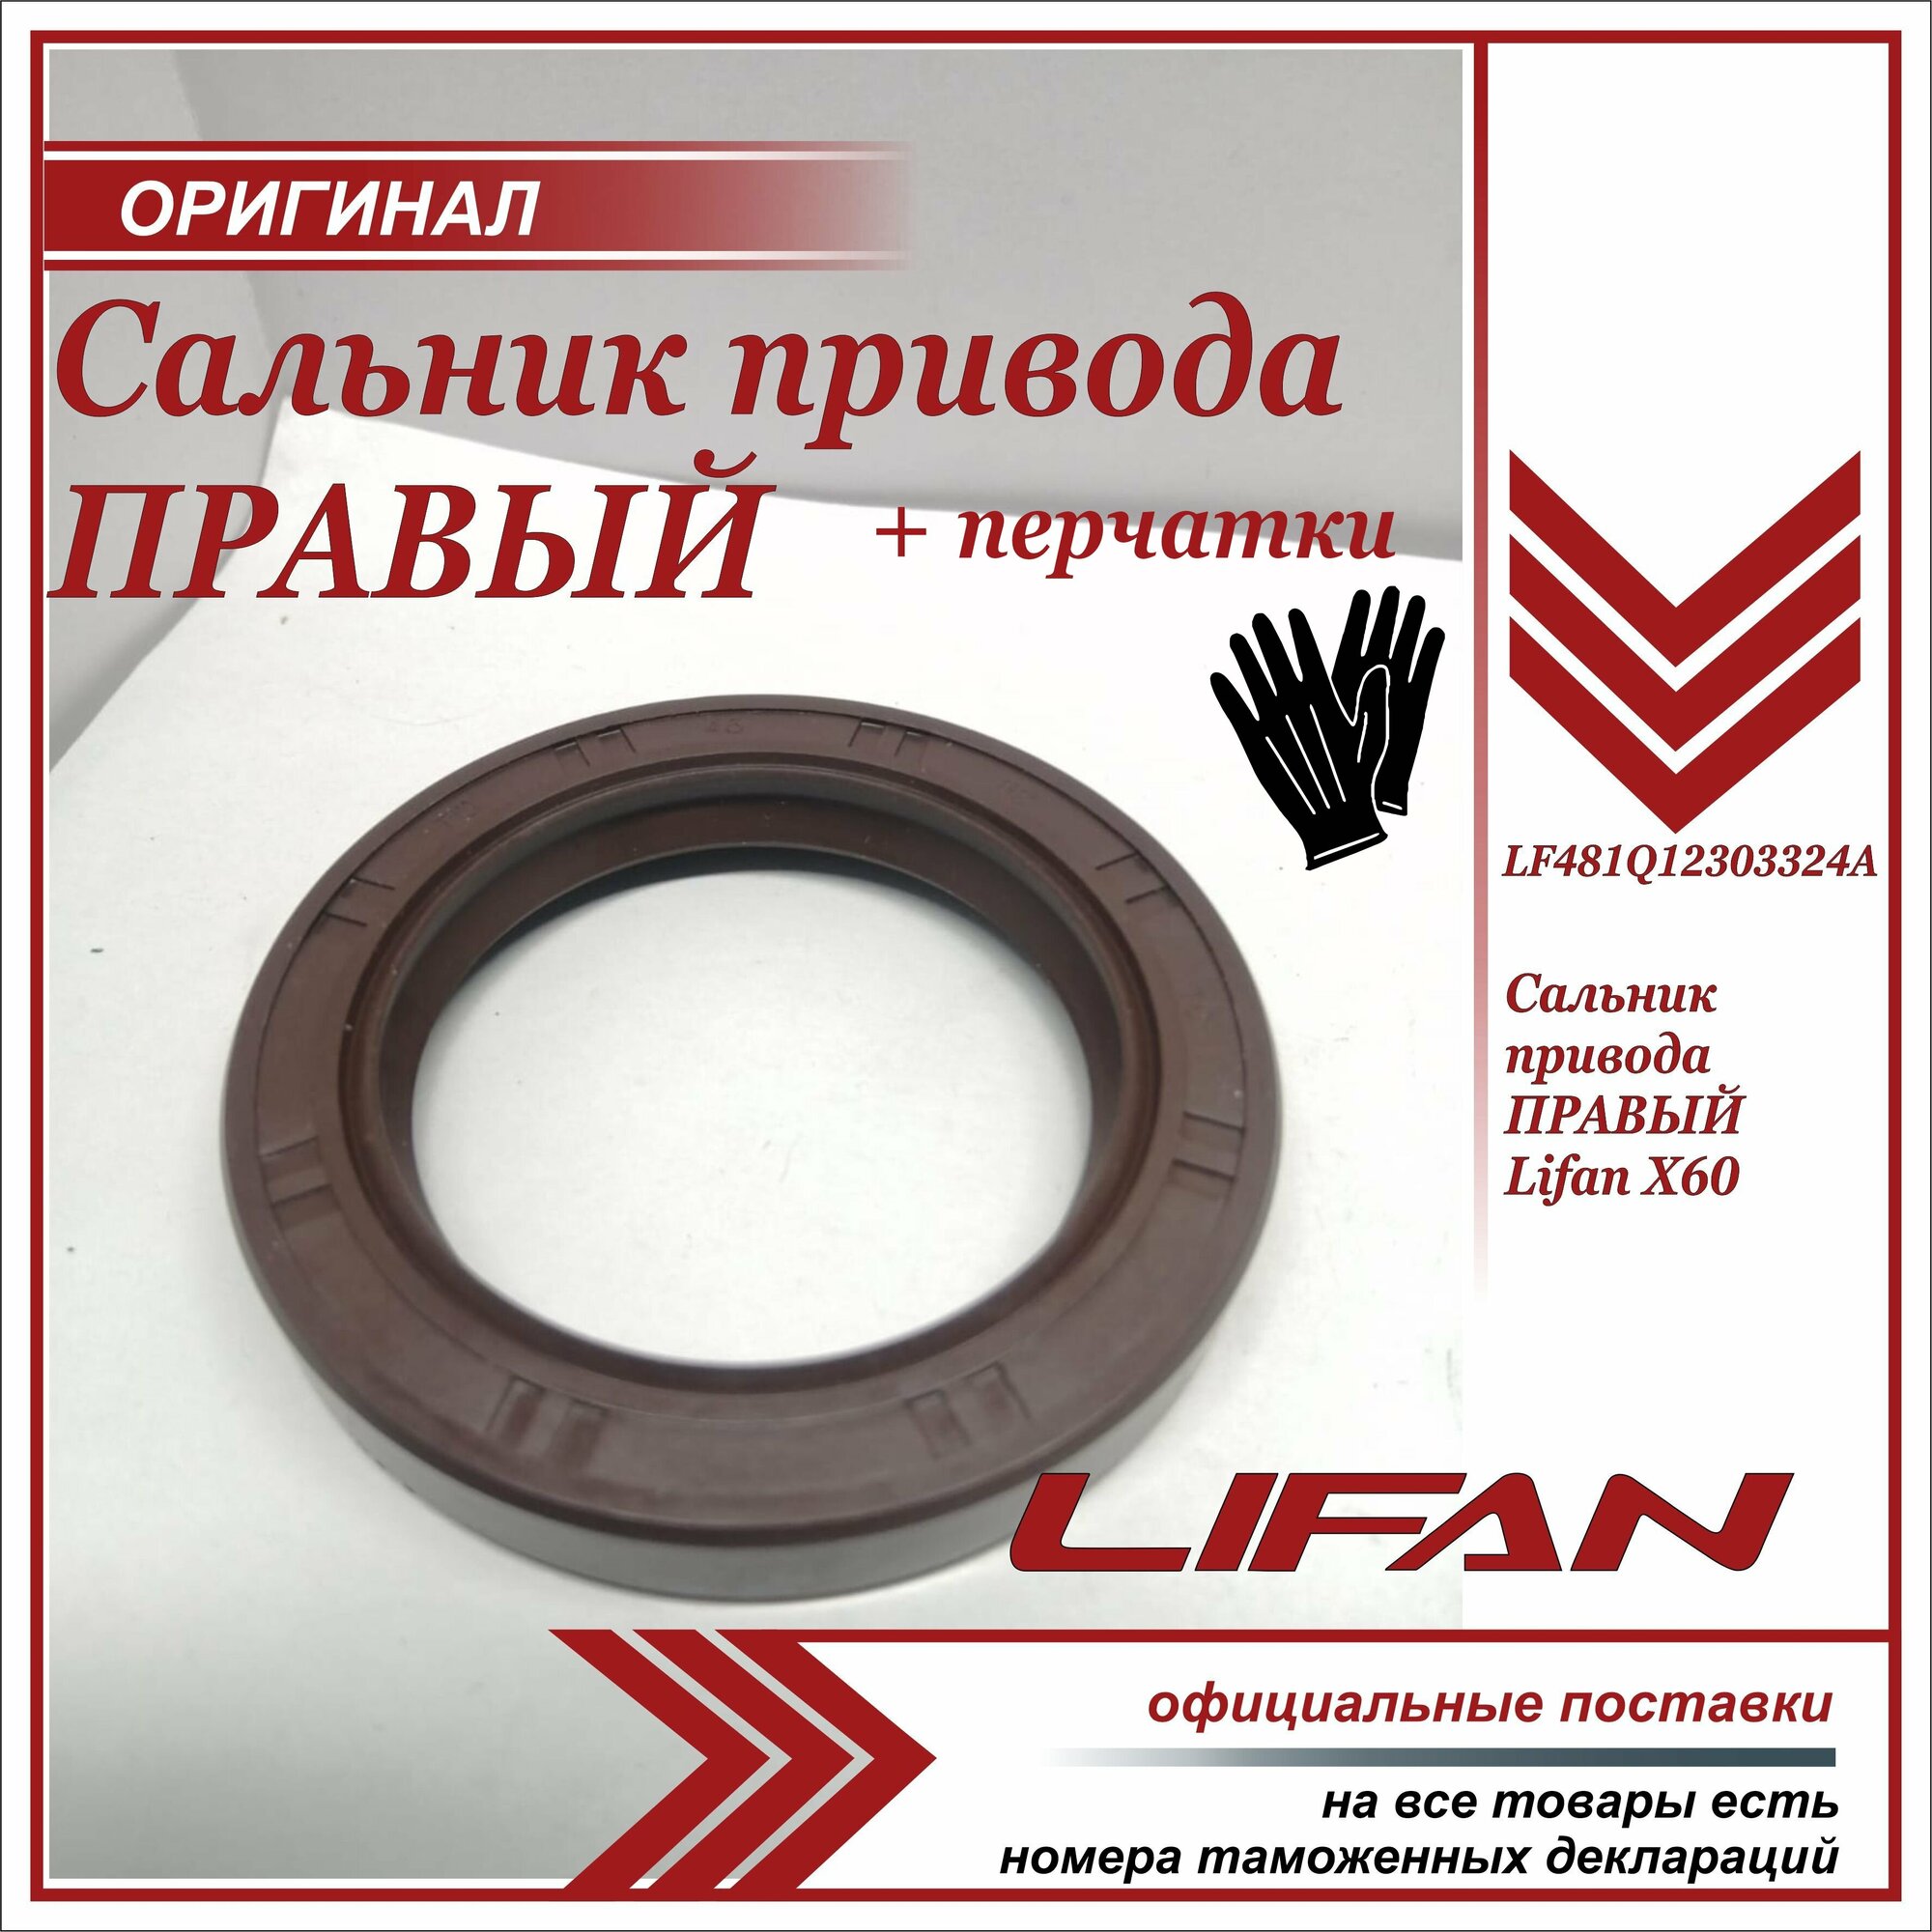 Сальник привода правый Лифан Х60, Lifan X 60 + пара перчаток в комплекте